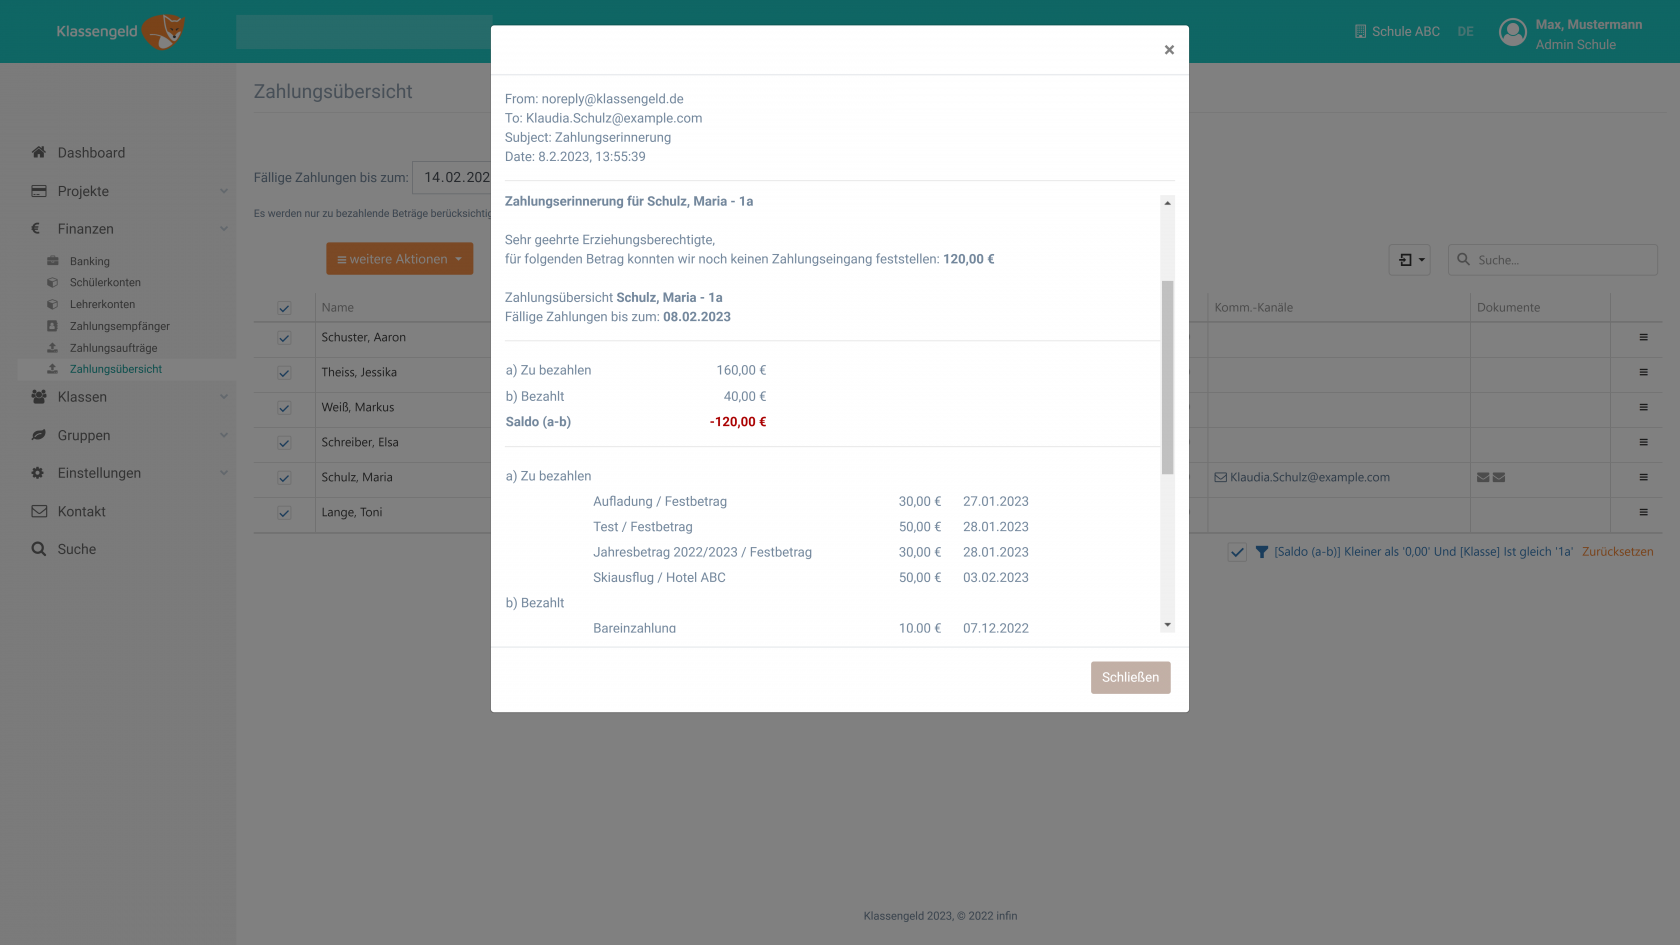 klassengeld.app_finances_balances(HighRes Screenshot) (2).png